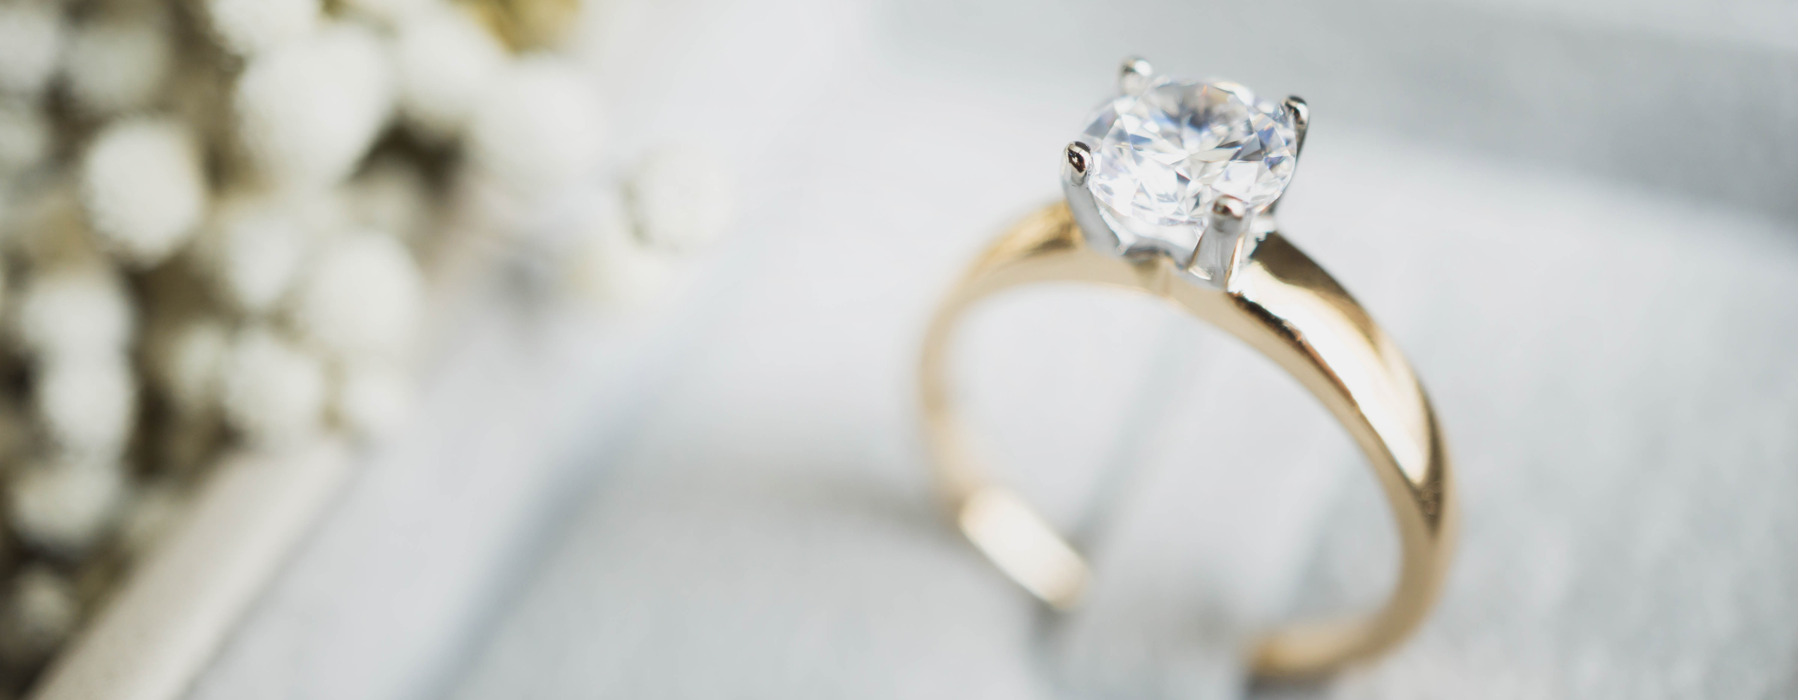 valor Ficticio Masaccio Cuánto gastar en un Anillo de Compromiso? | Matrimony Rings